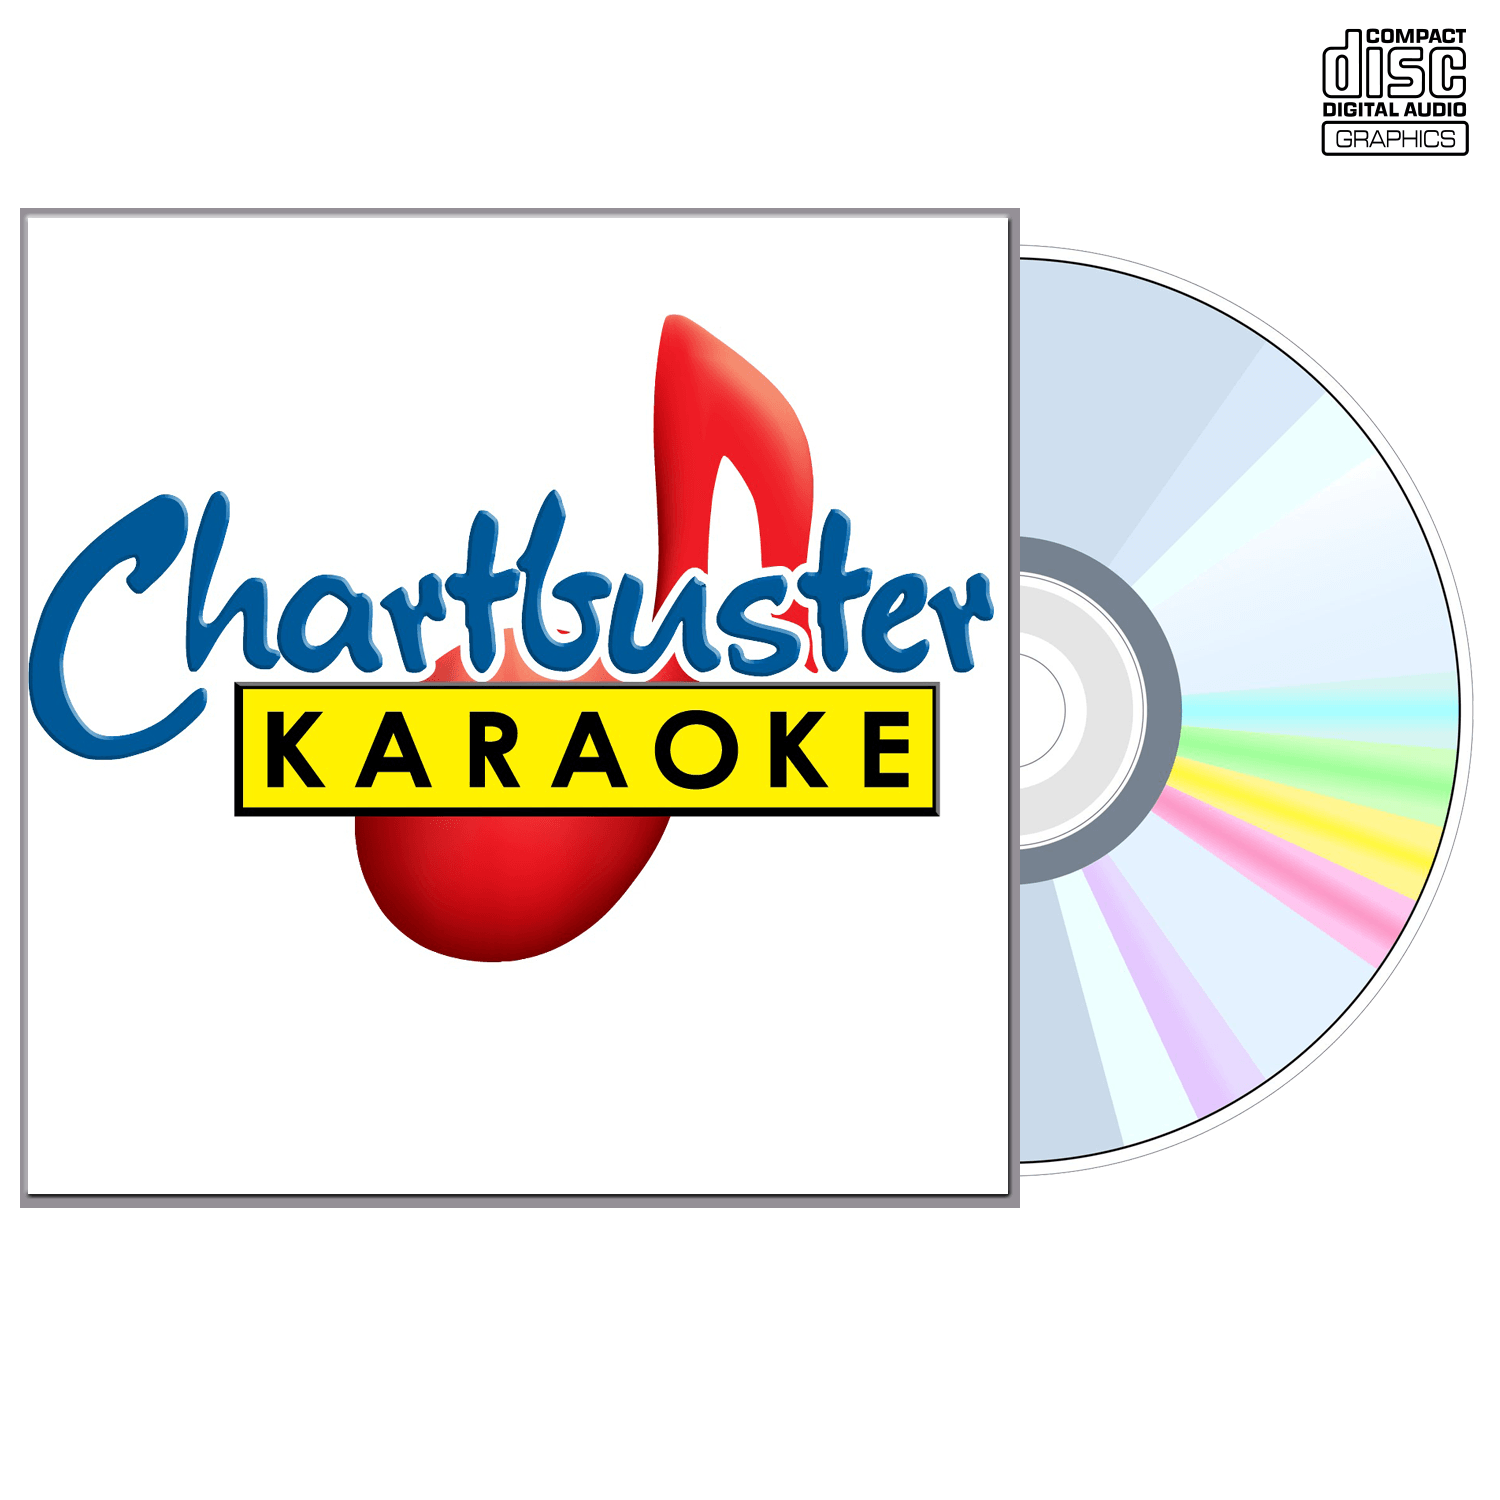 George Michael And Wham - CD+G - Chartbuster Karaoke - Karaoke Home Entertainment